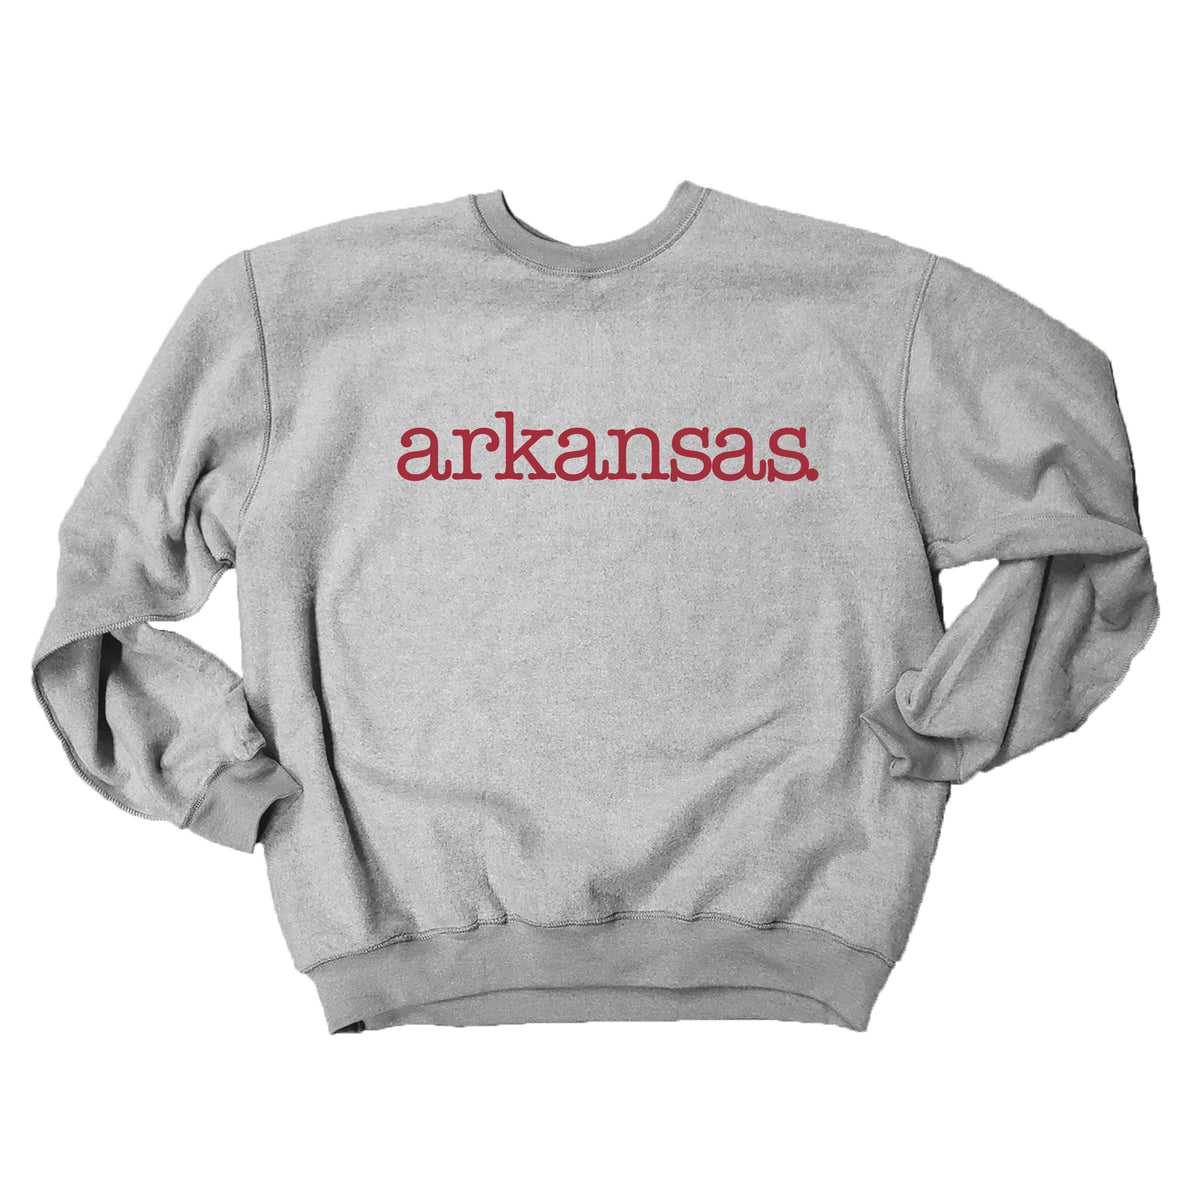 Arkansas. inverted Sweatshirt